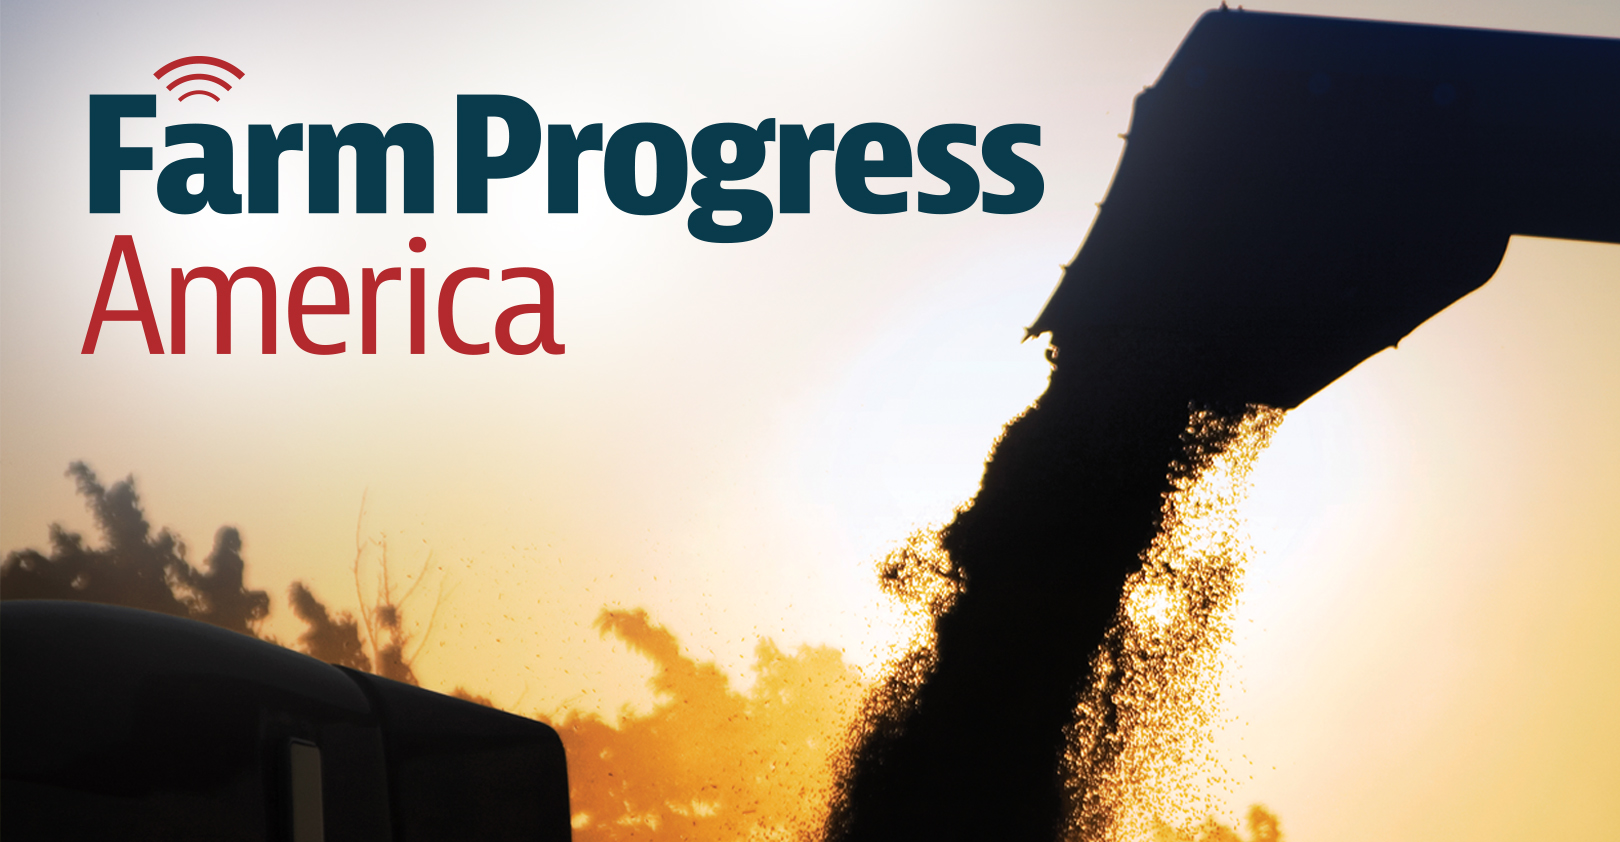 Farm Progress America, May 24, 2022